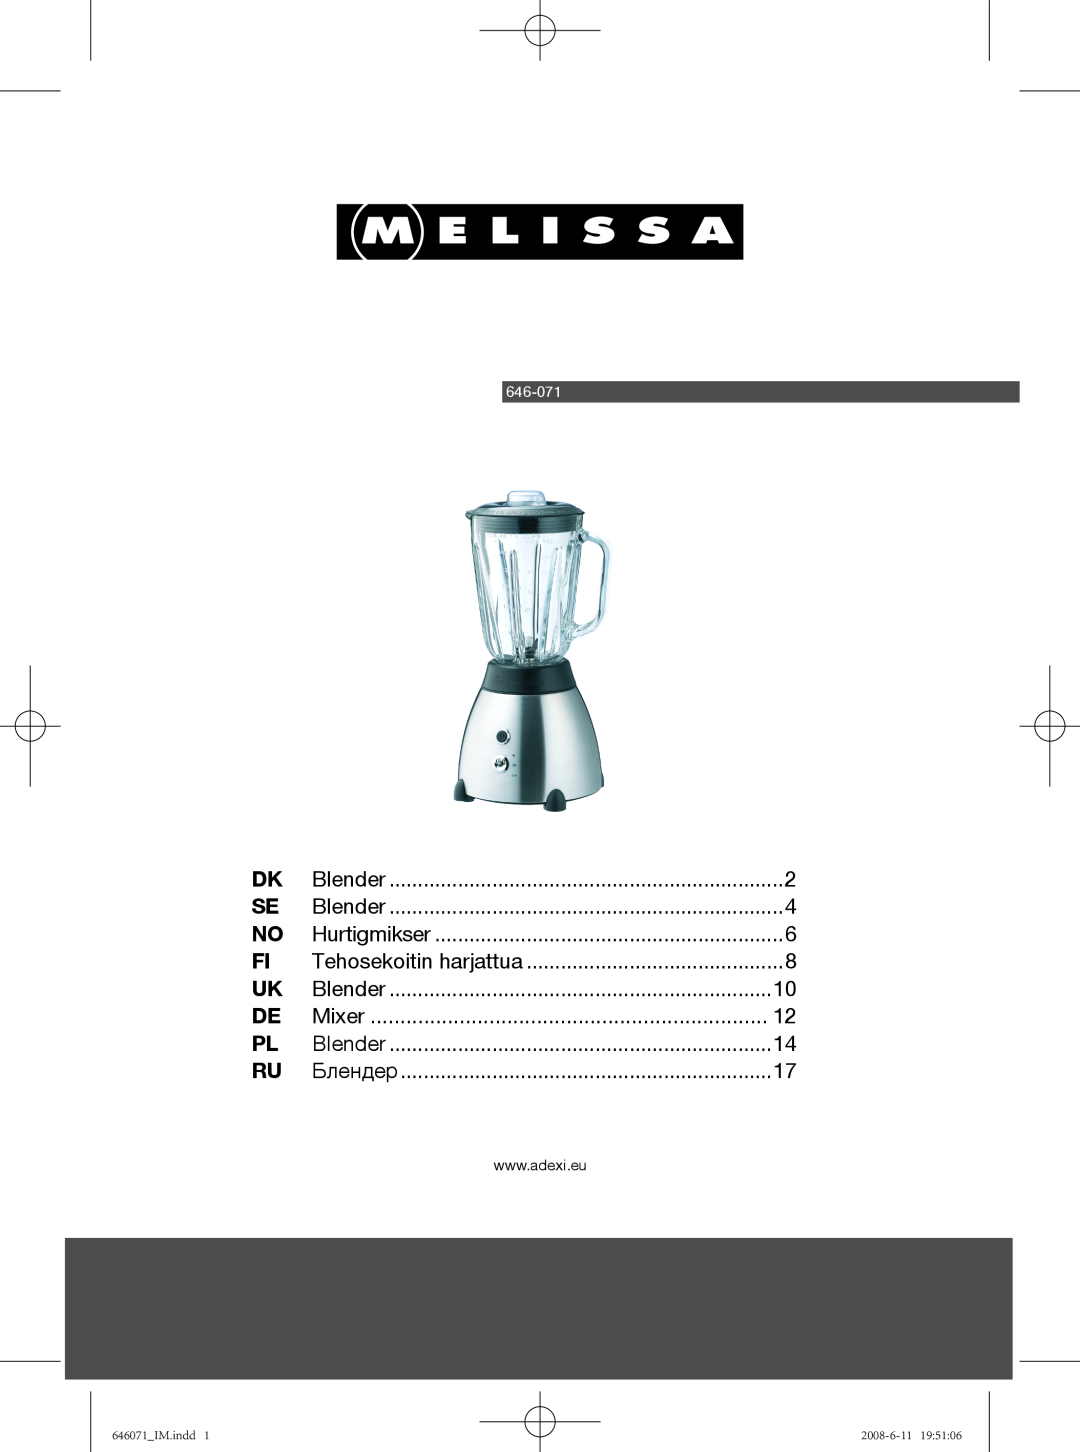 Melissa 646-071 manual Blender, Hurtigmikser, Tehosekoitin harjattua, Mixer, Блендер, 646071 IM.indd, 2008-6-1119:51:06 